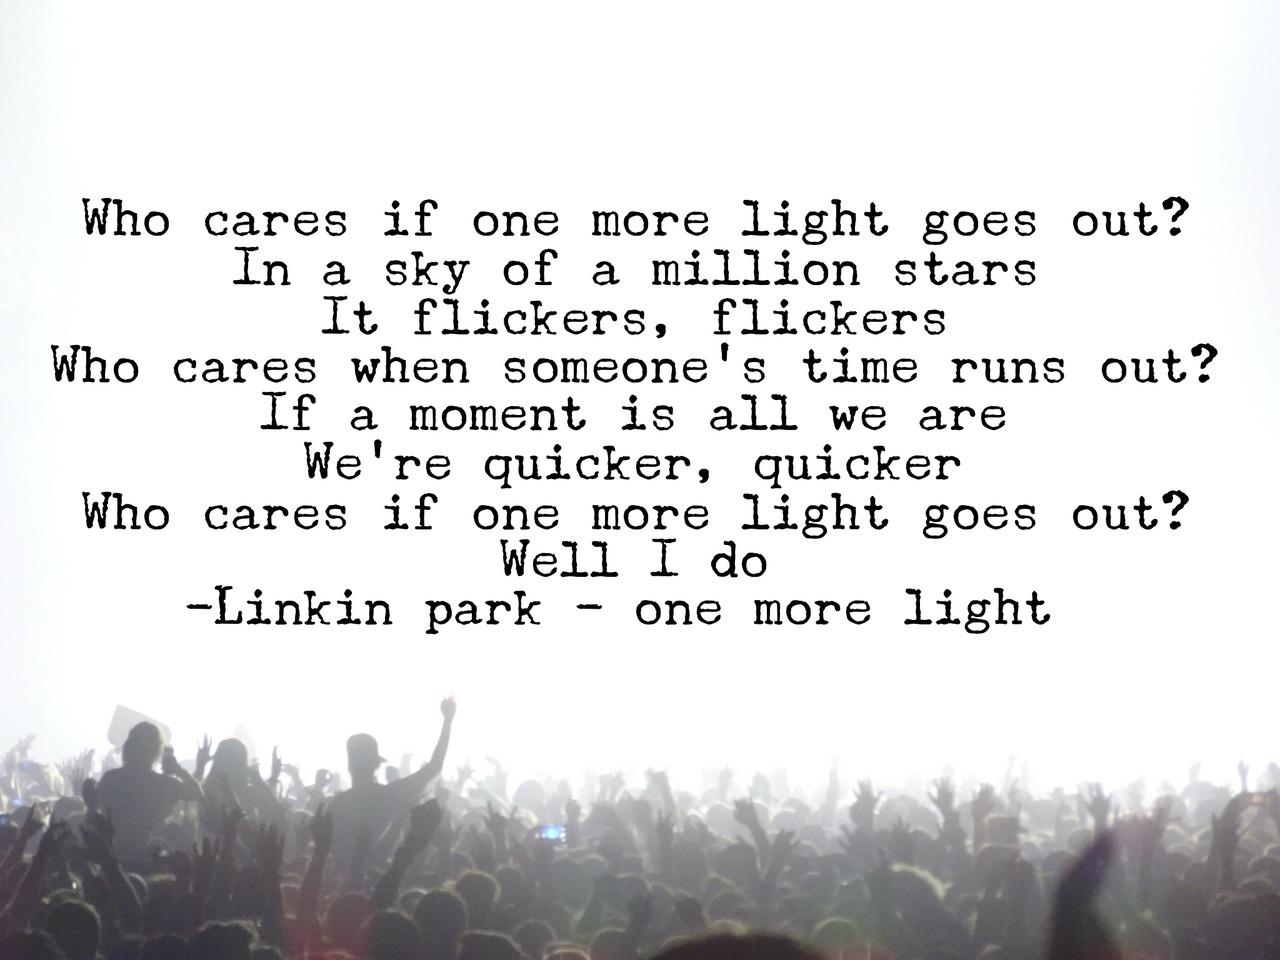 Linkin park more light